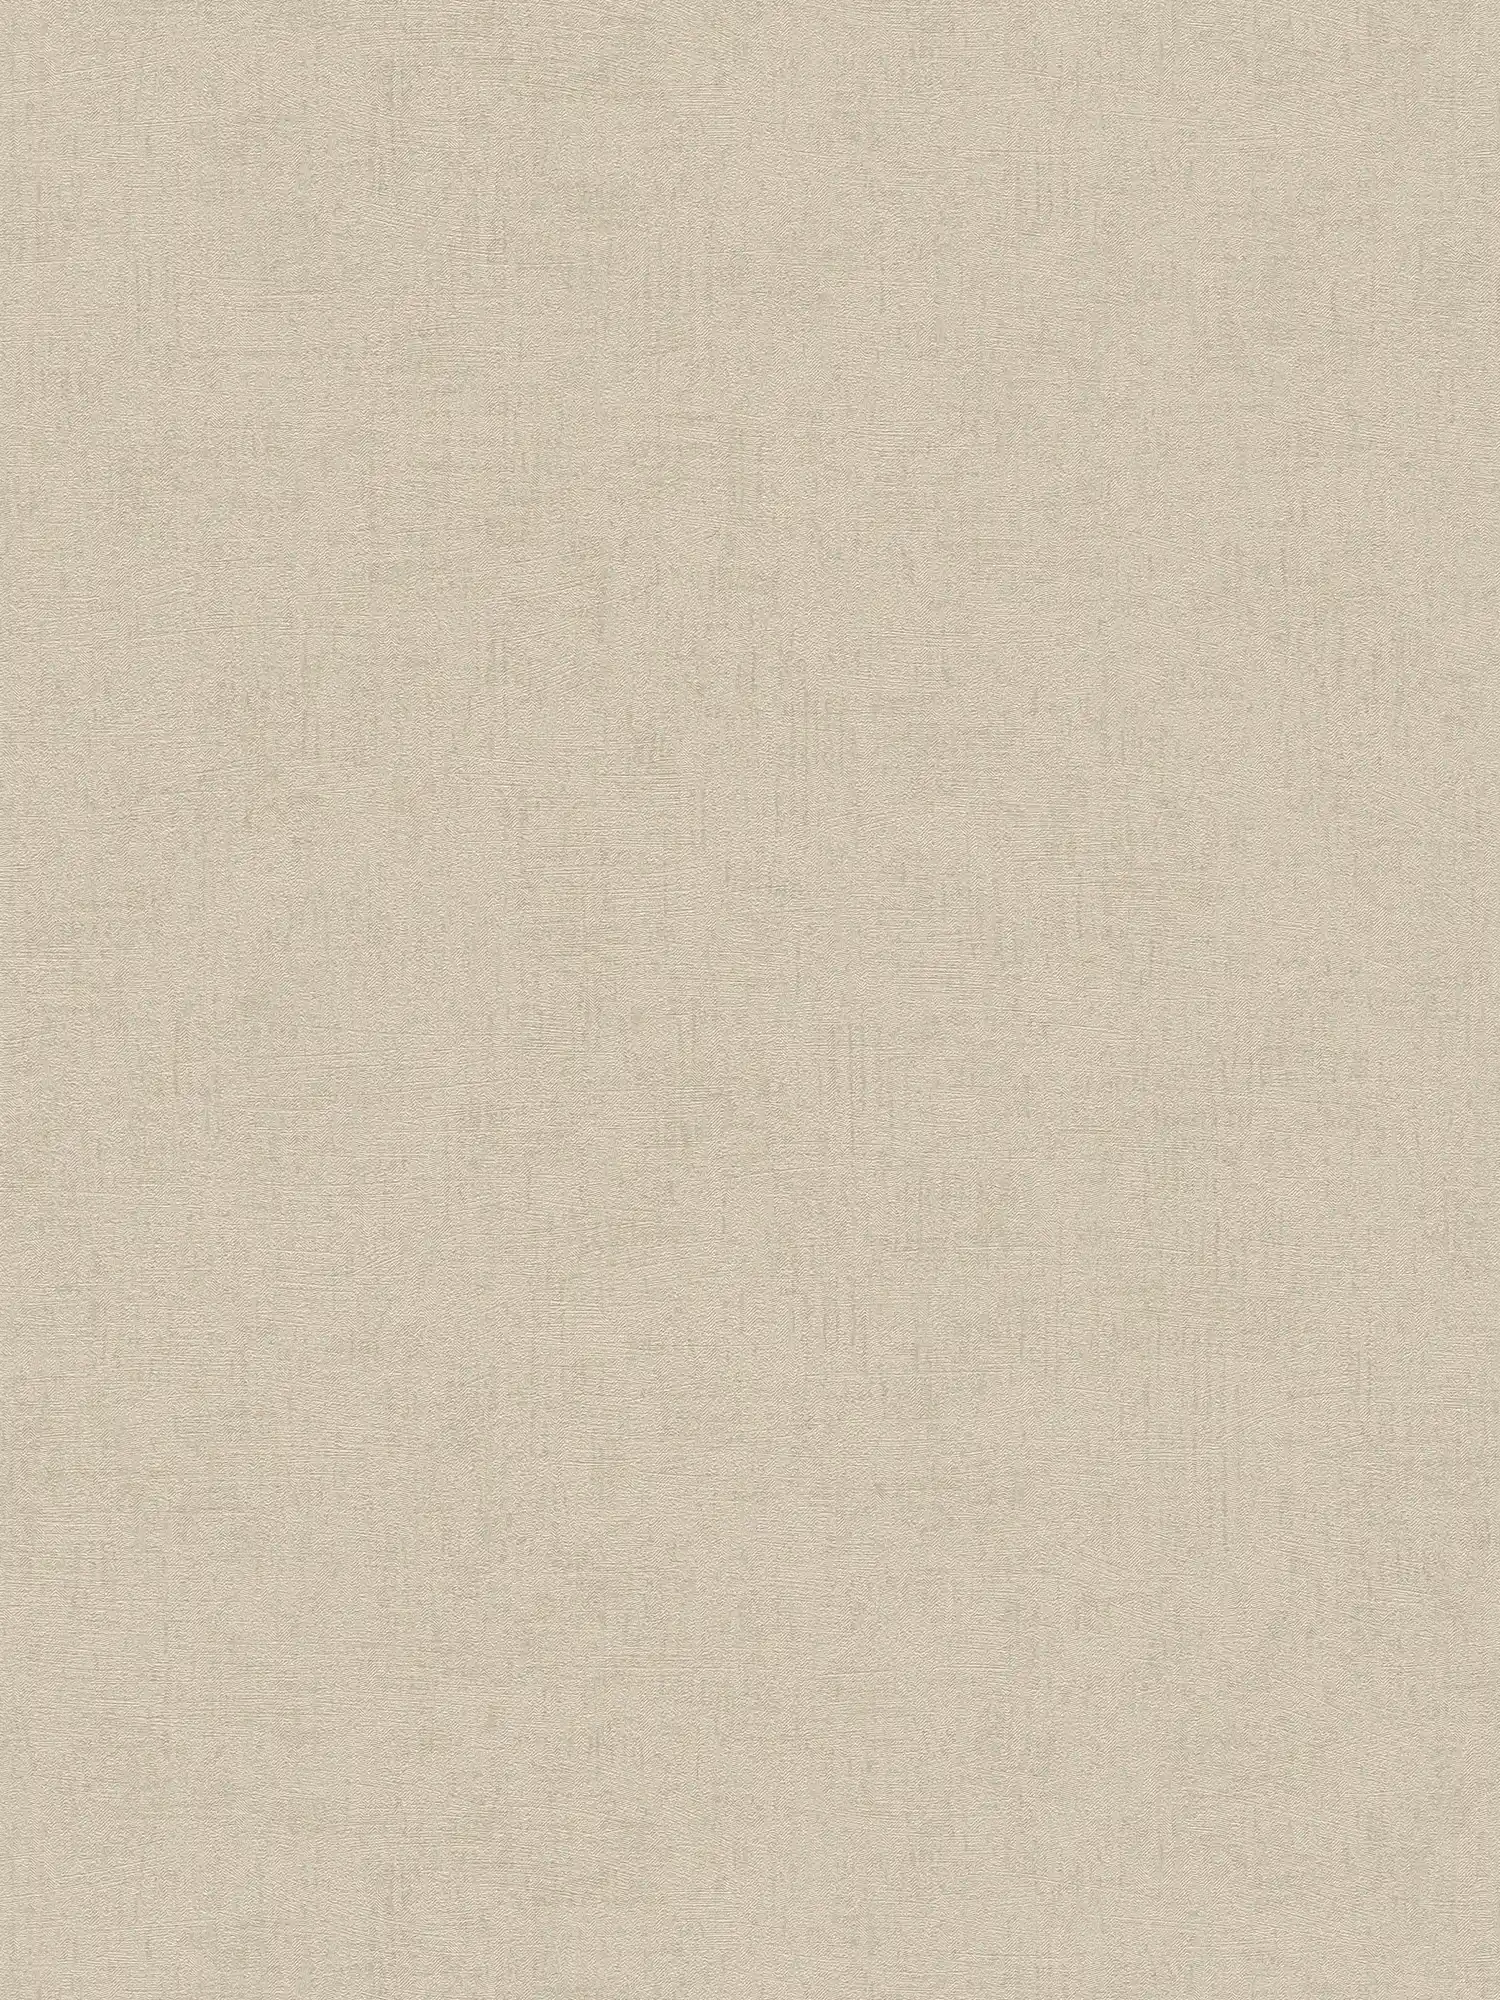 Plain wallpaper with structure & glitter effect - beige, brown, metallic
